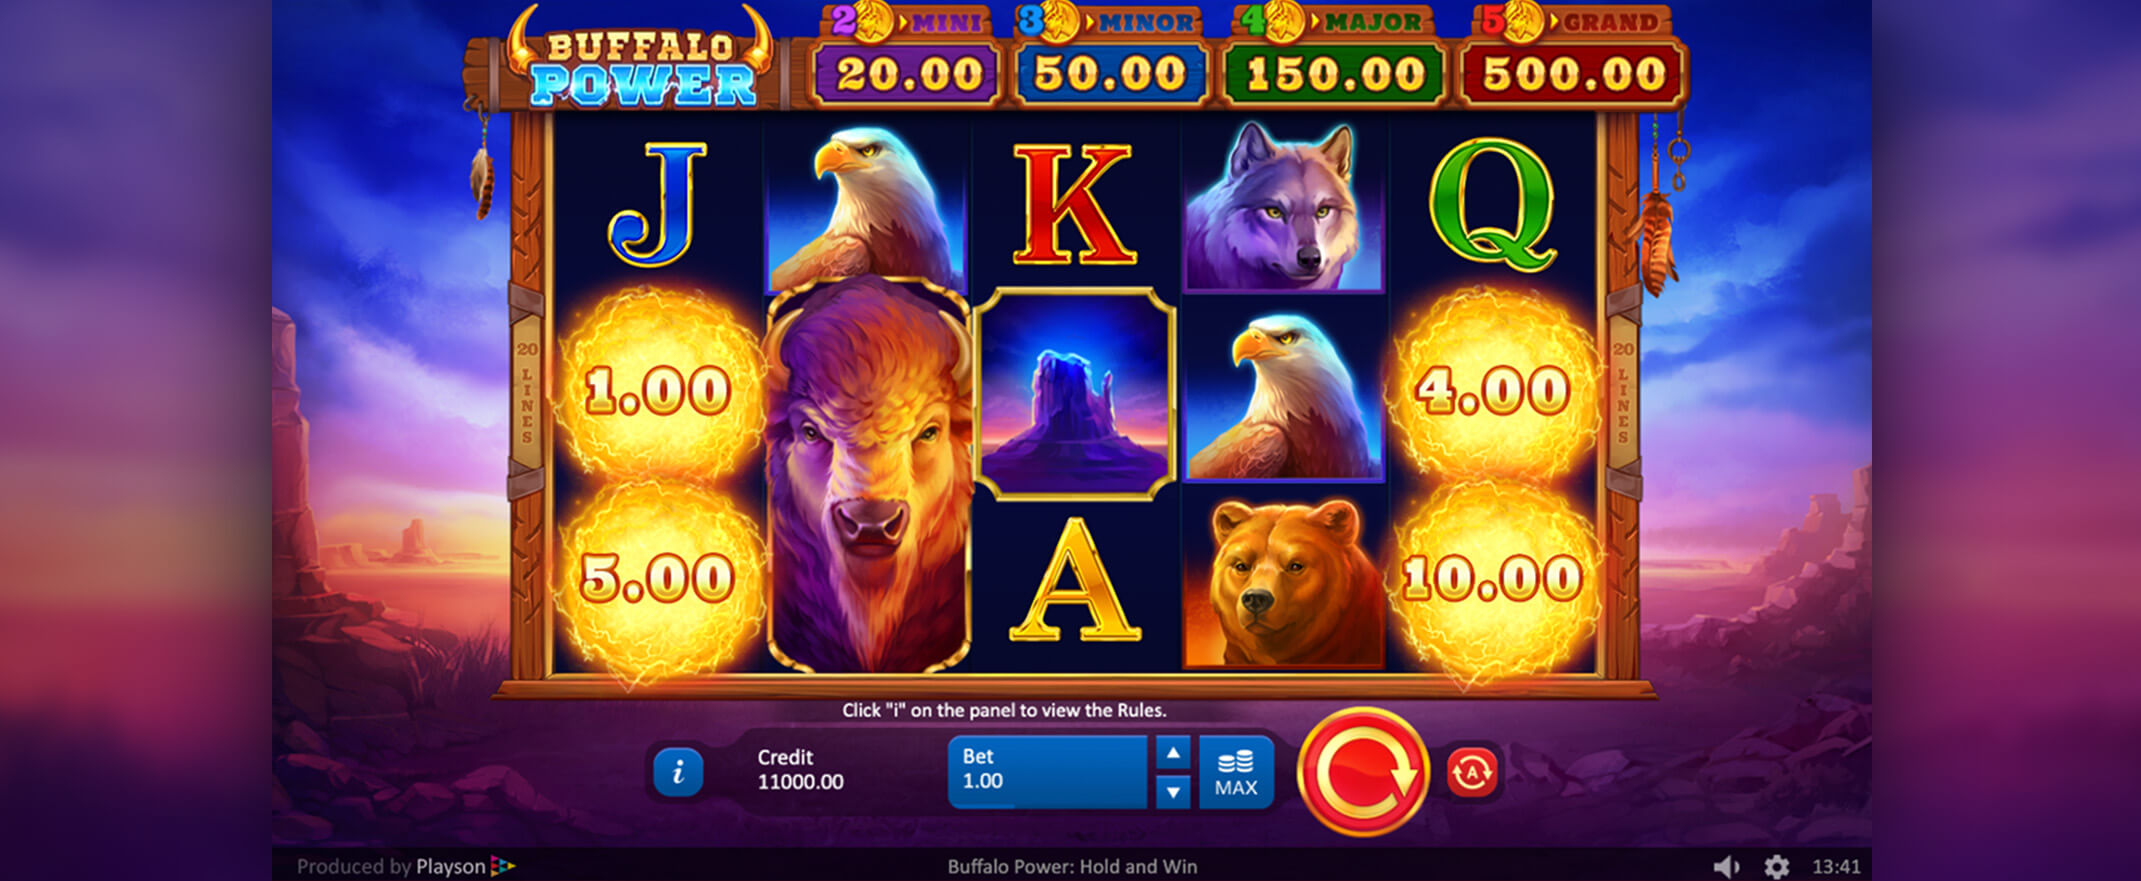 Buffalo Power: Hold and Win slot screenshot